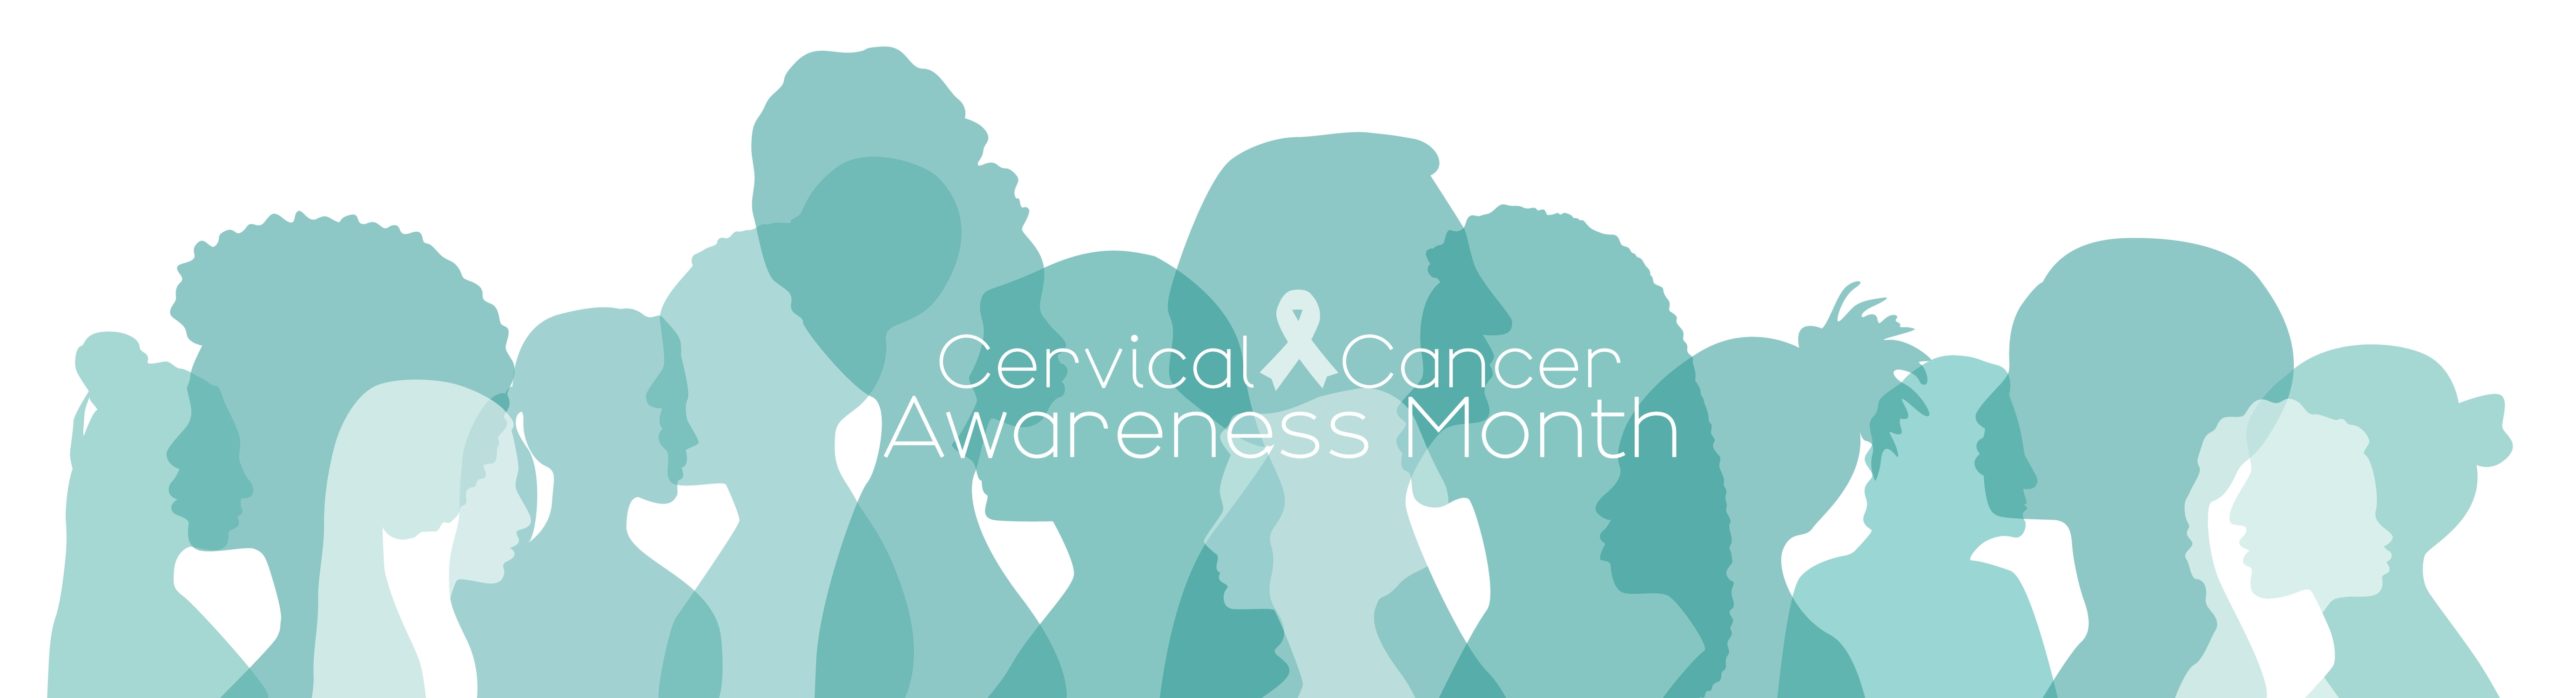 Cervical Cancer Awareness Month: January